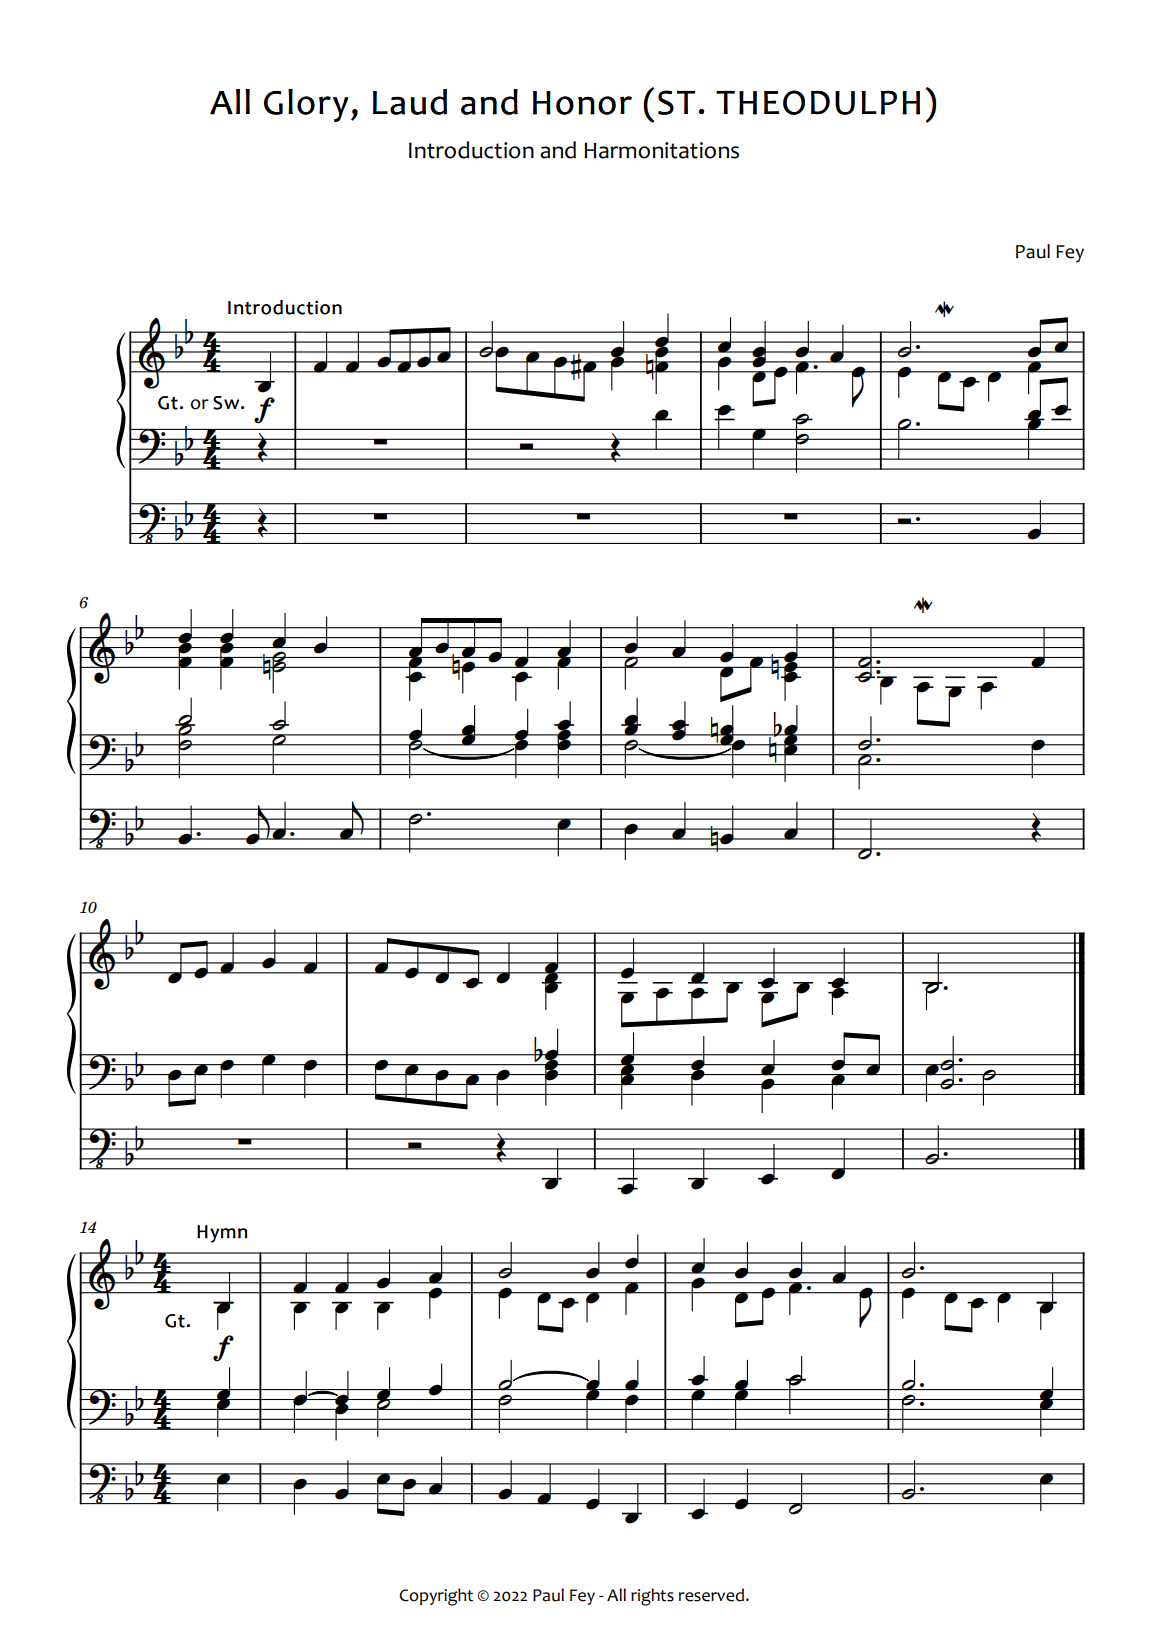 5 EASTER Hymns Reharmonized for Pipe Organ by Paul Fey